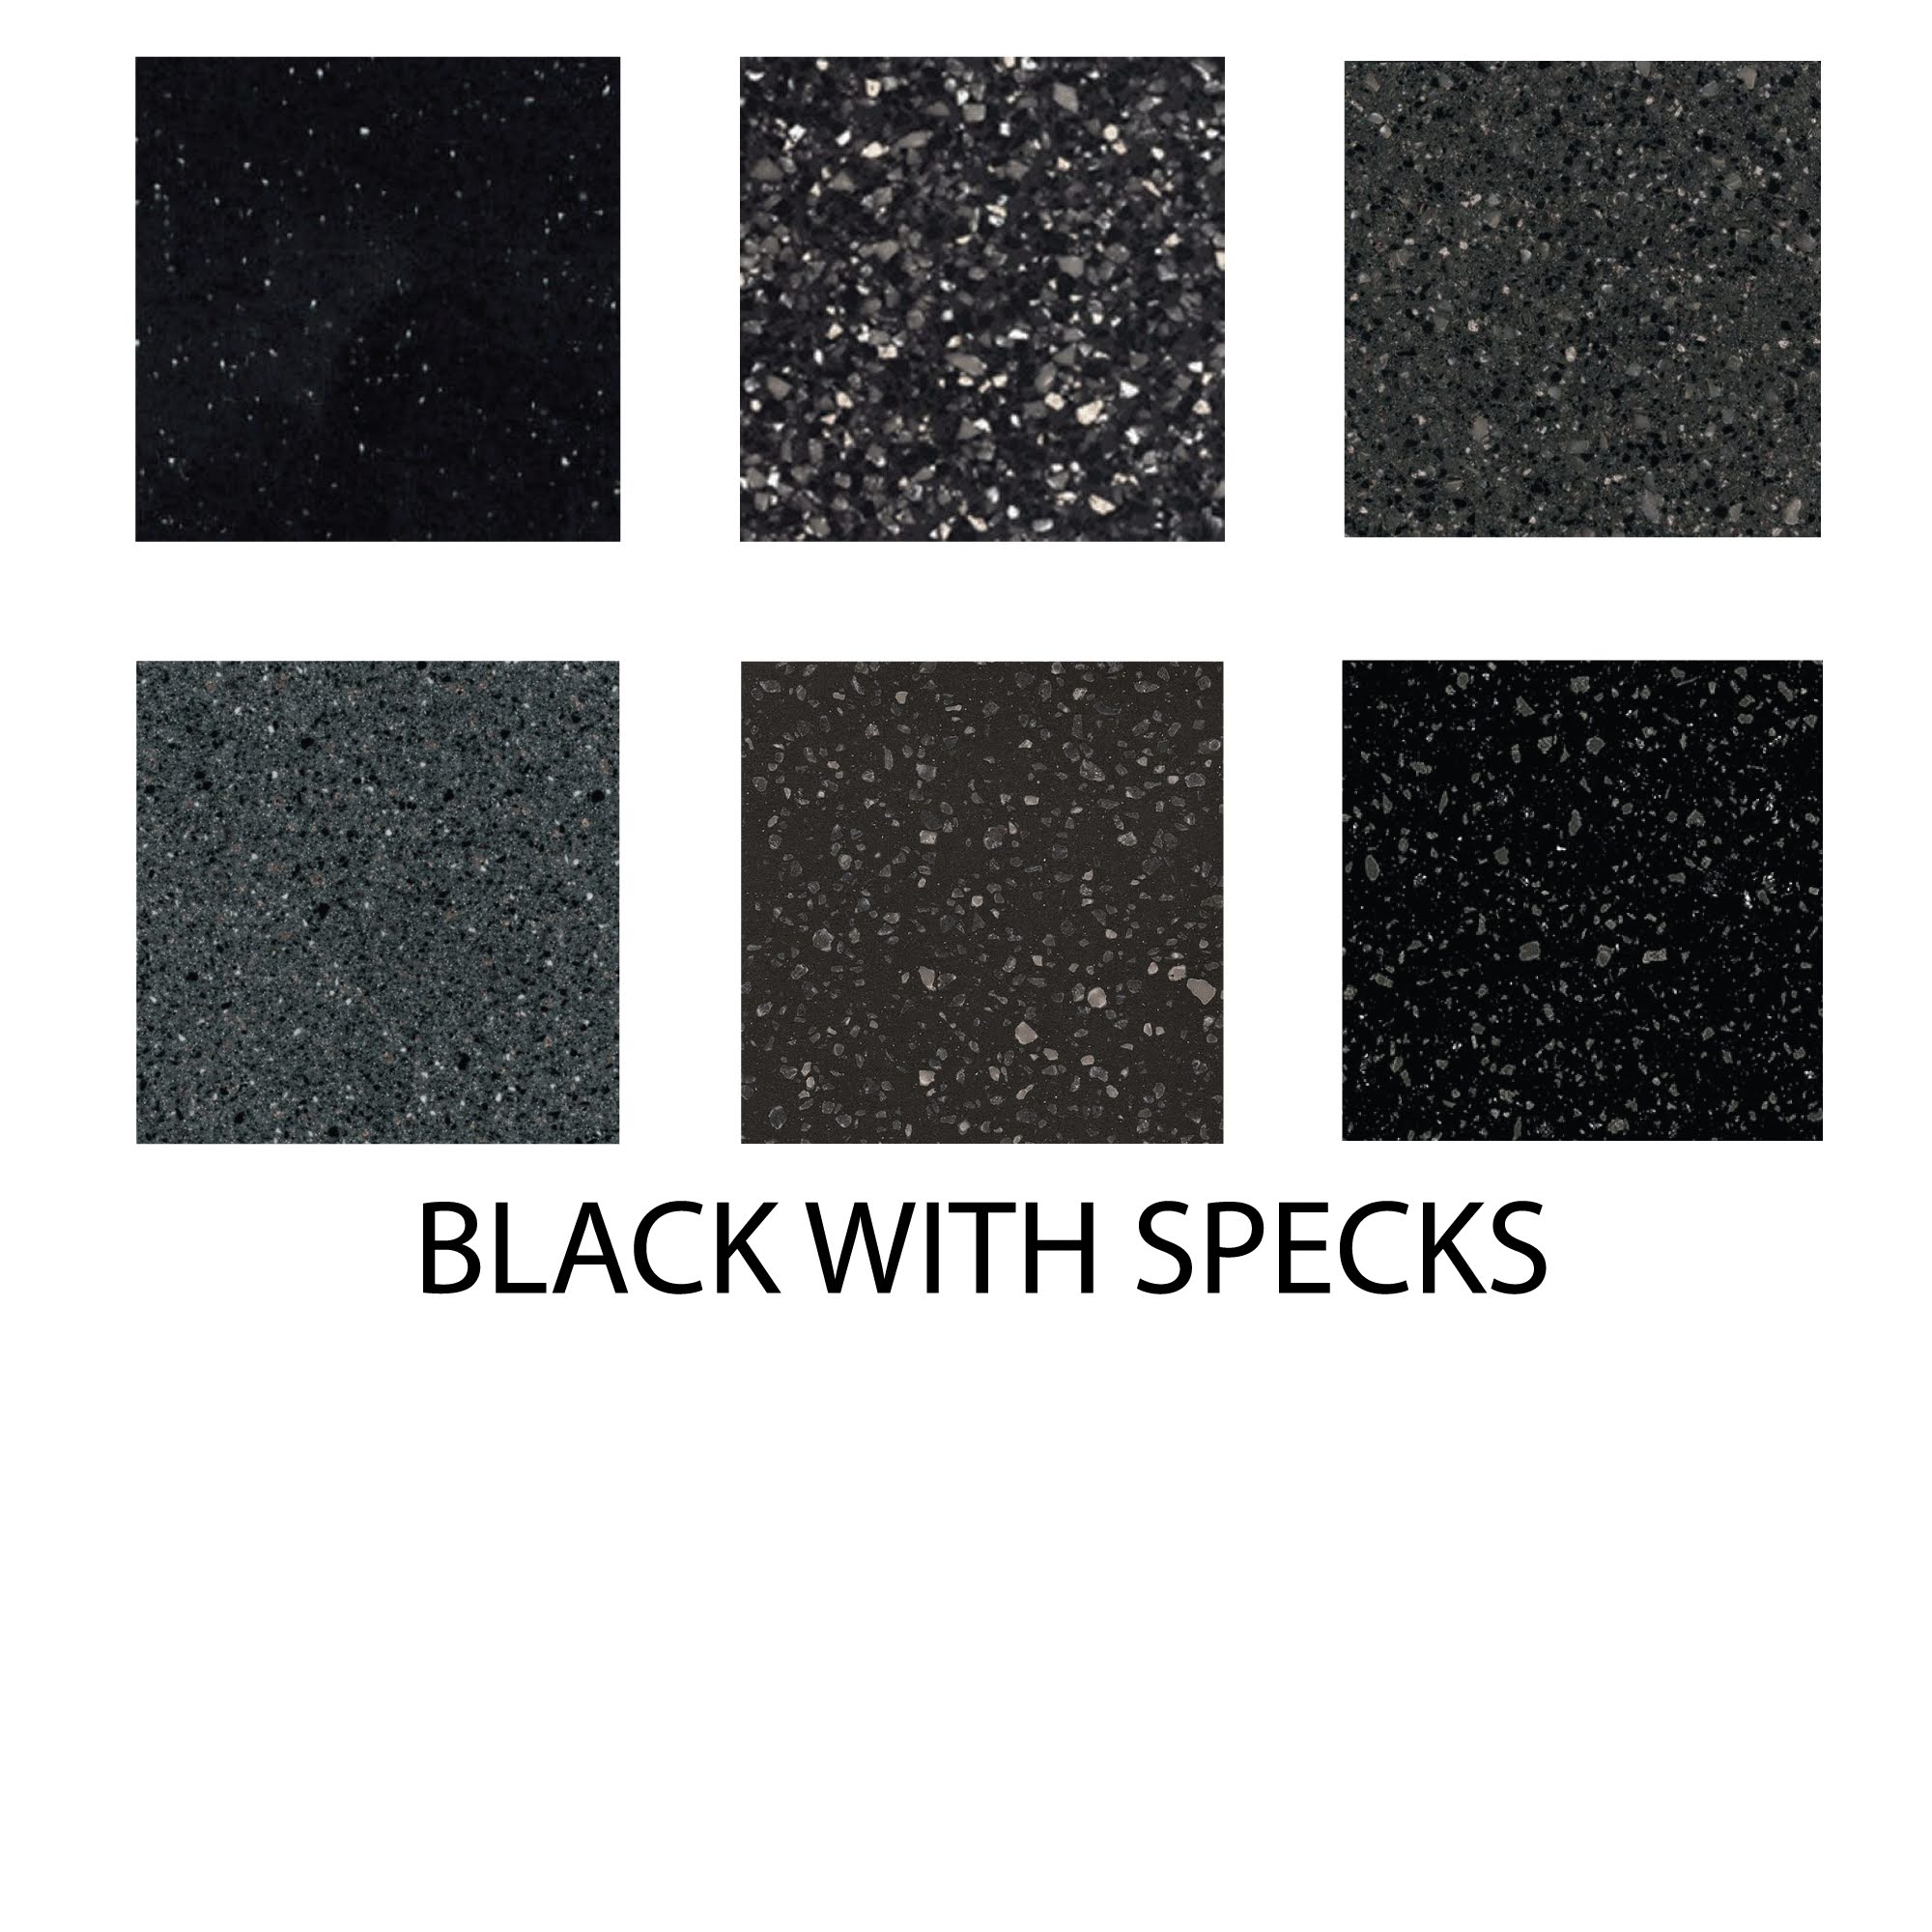 https://boardinthekitchen.com/wp-content/uploads/2020/08/BE-black-with-specks-3.jpg